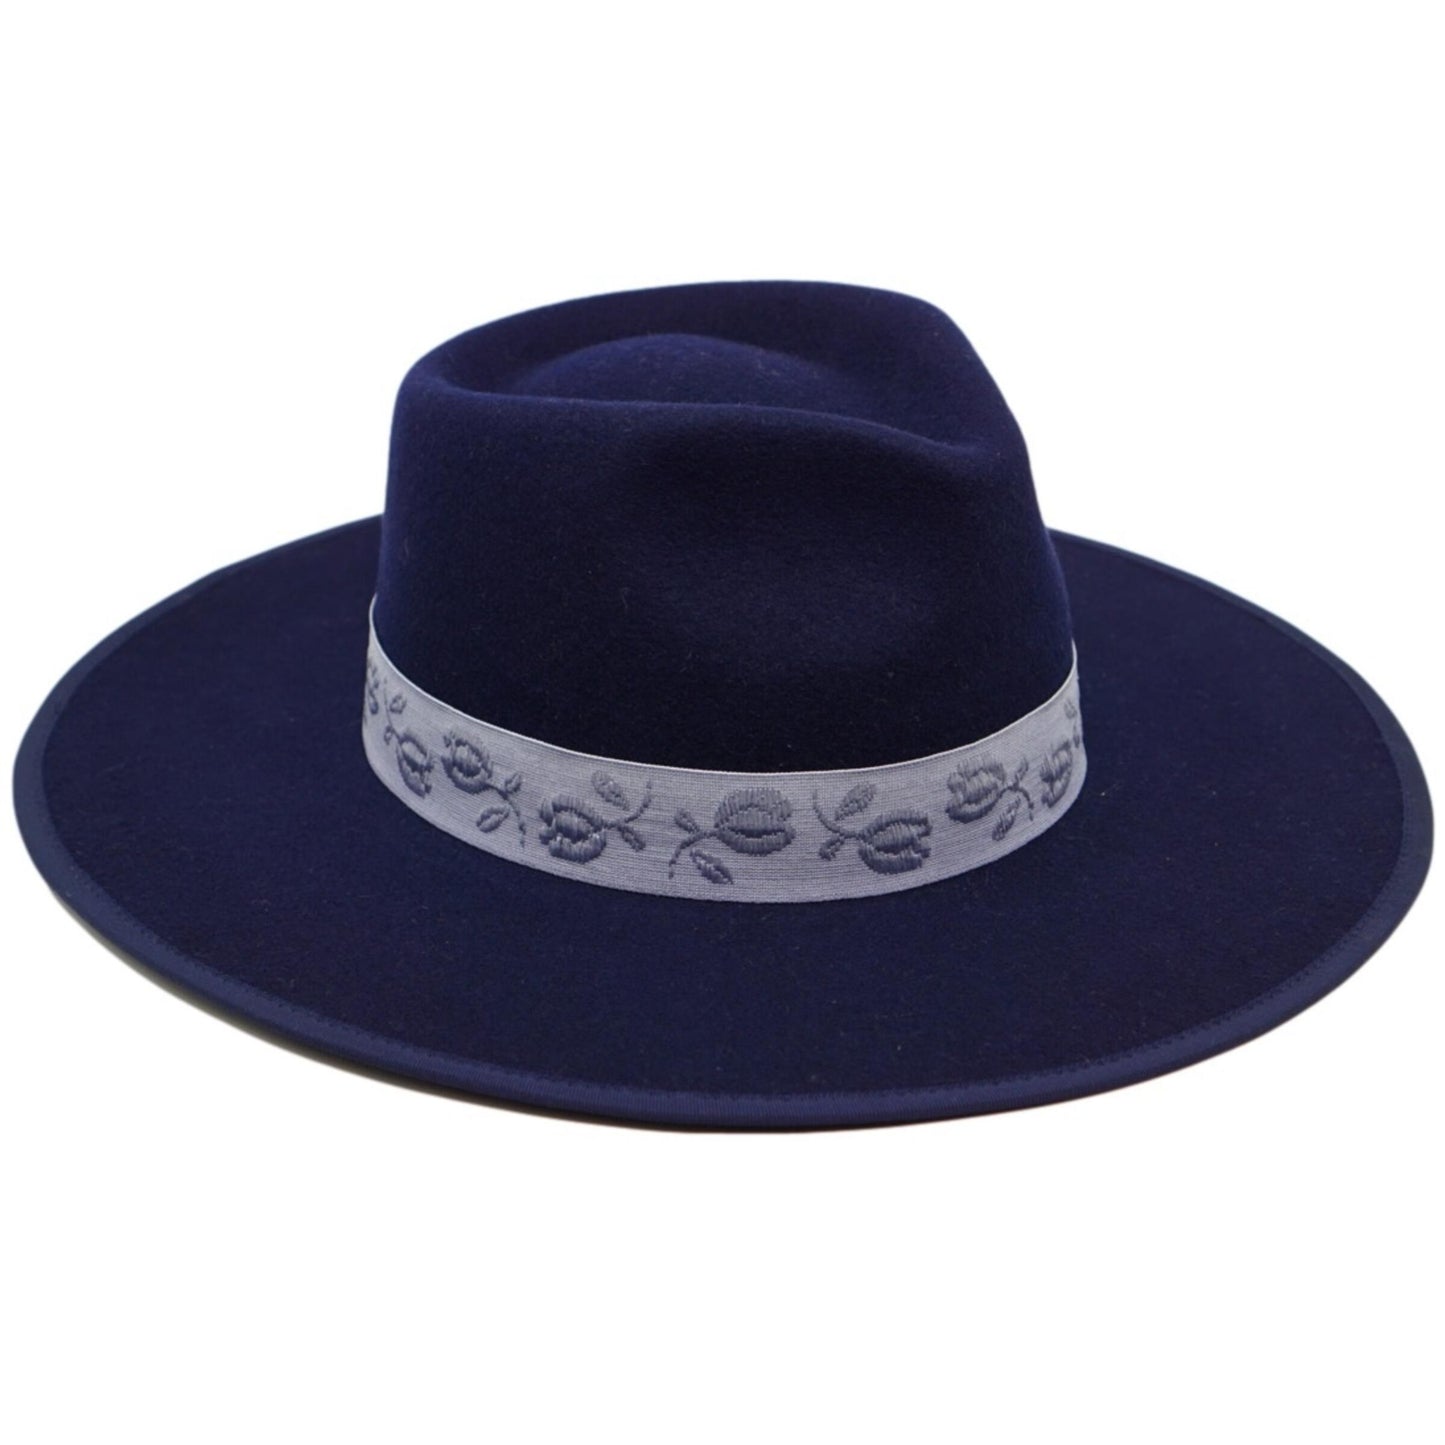 Olive & Pique Jackson Wool Felt Rancher Hat - Navy